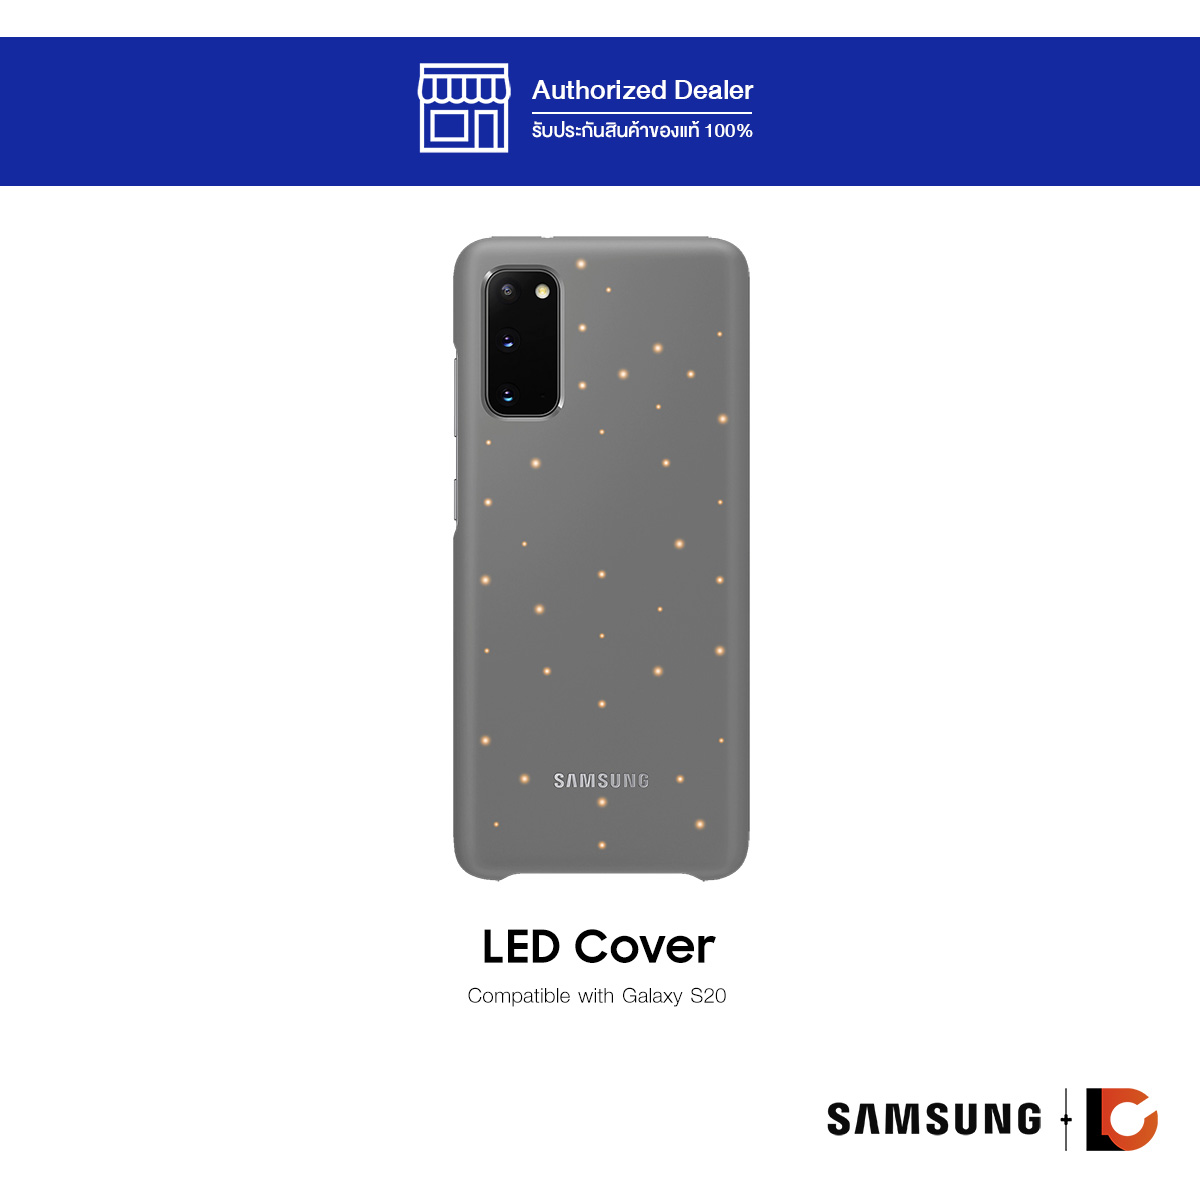 SAMSUNG Galaxy S20 LED Cover | เคสสำหรับ Galaxy S20 LED Cover *ไม่รวมตัวเครื่อง สี GREY สี GREYรูปแบบรุ่นที่ีรองรับ Samsung Galaxy S20